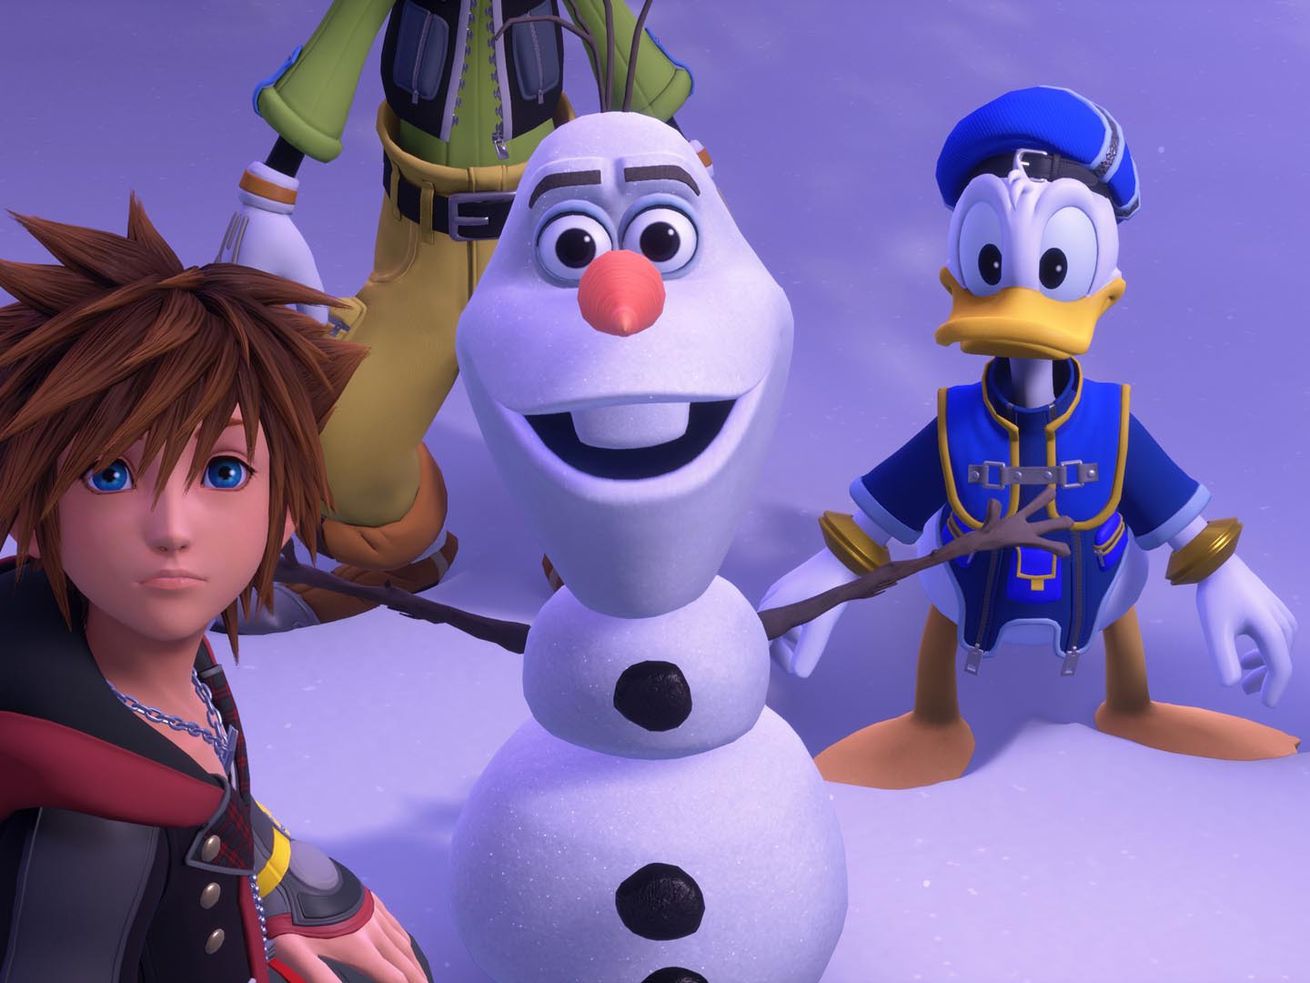 Sora, Donald and Goofy meet Olaf from Frozen in “Kingdom Hearts III.”